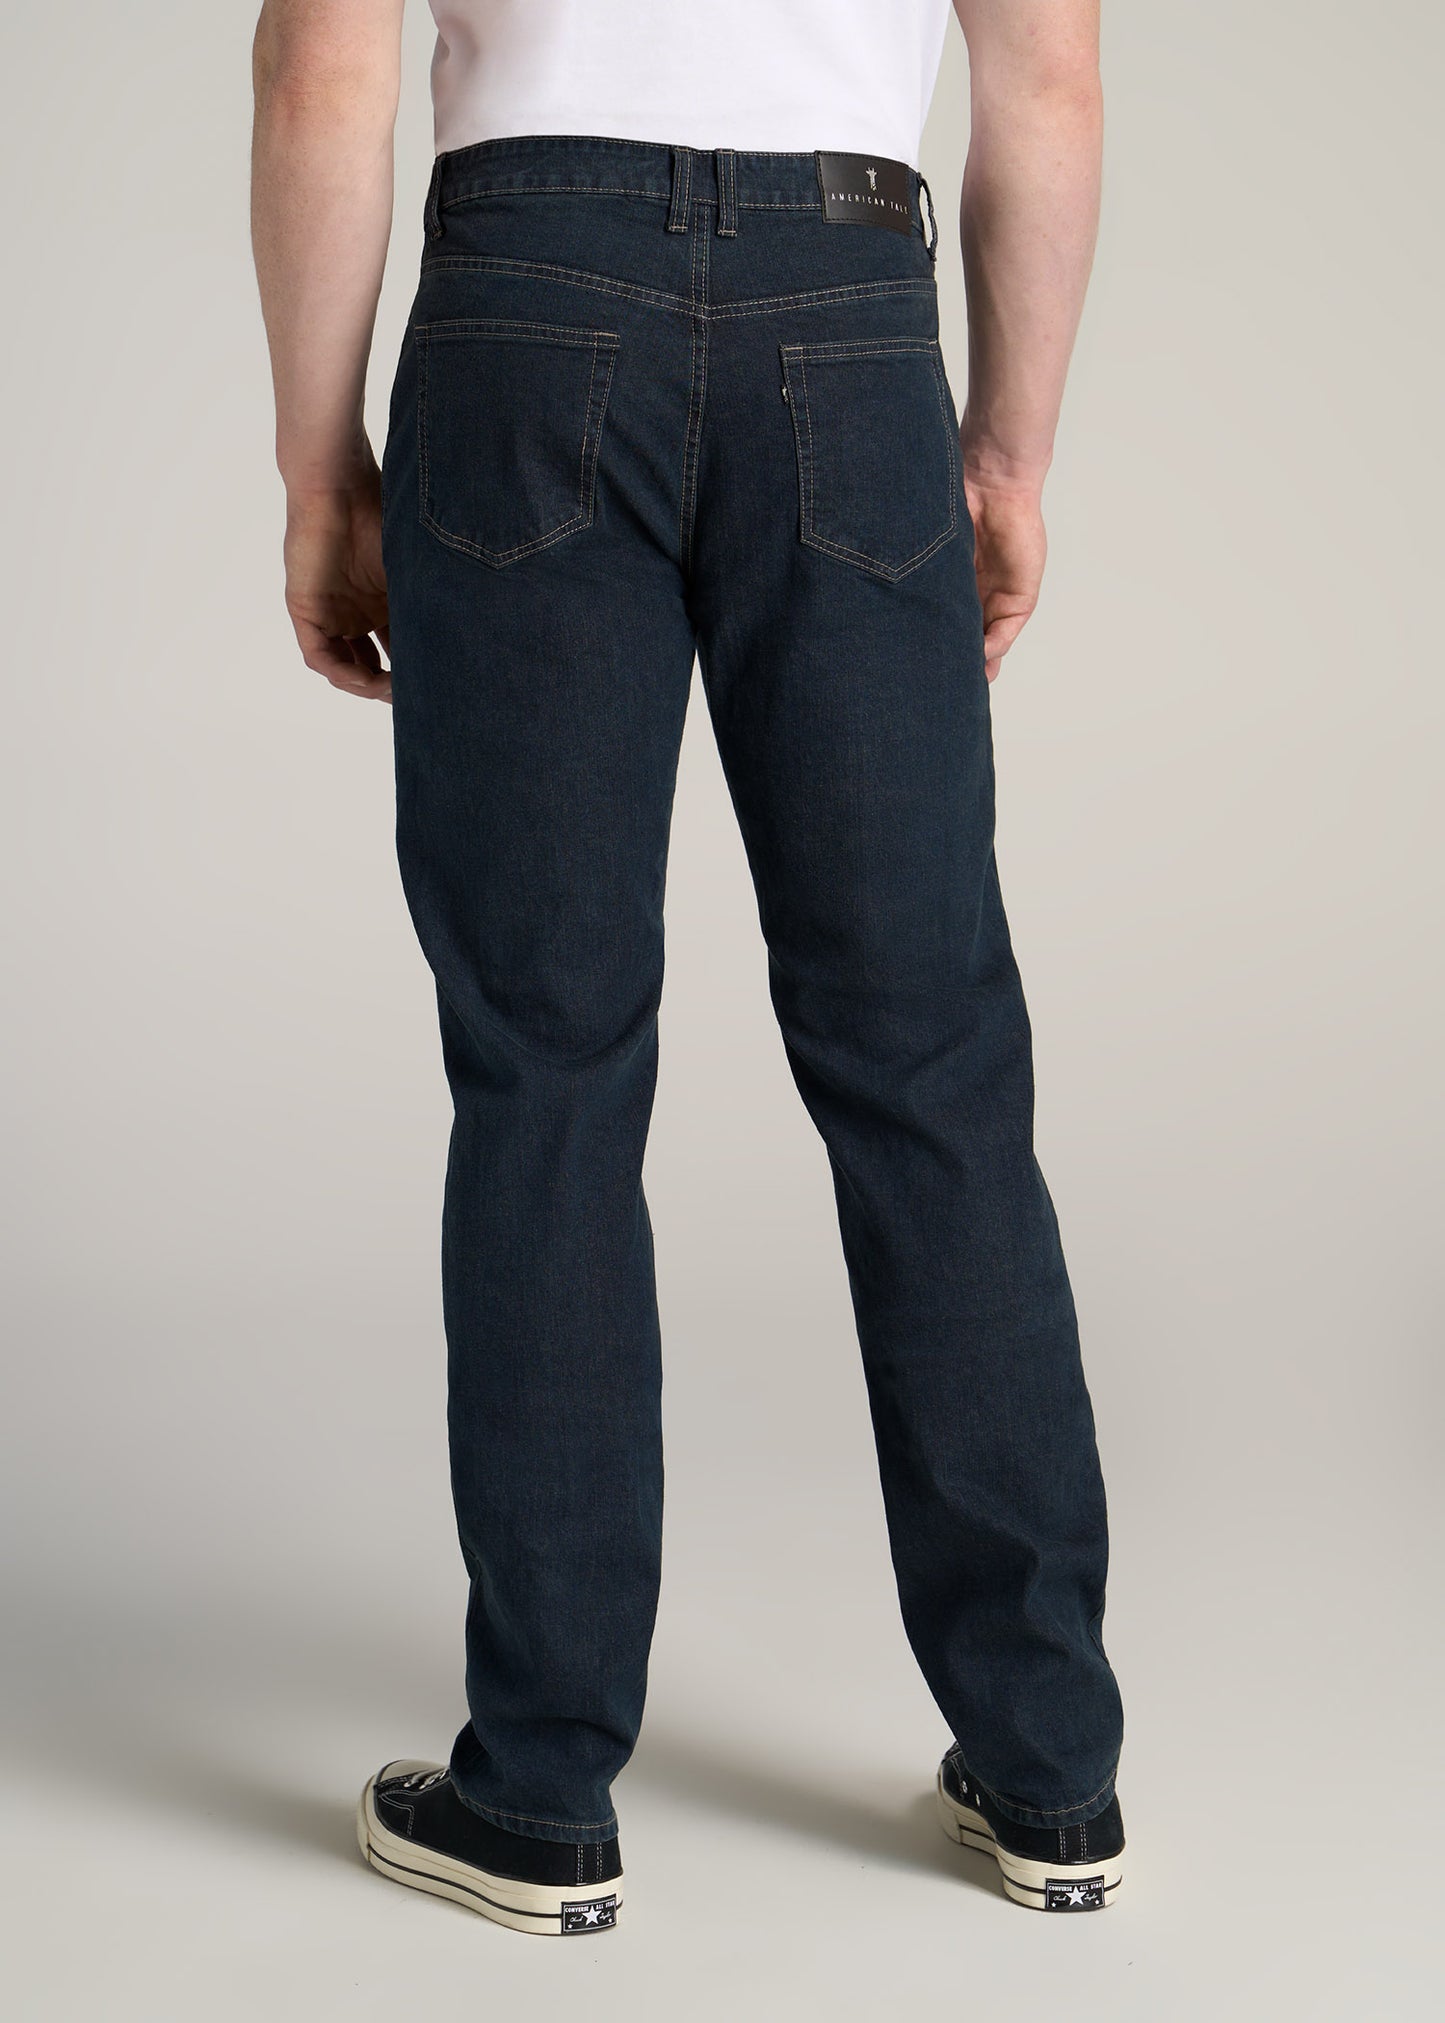    American-Tall-Men-J1-Straight-Leg-Jeans-Dark-Rinse-back